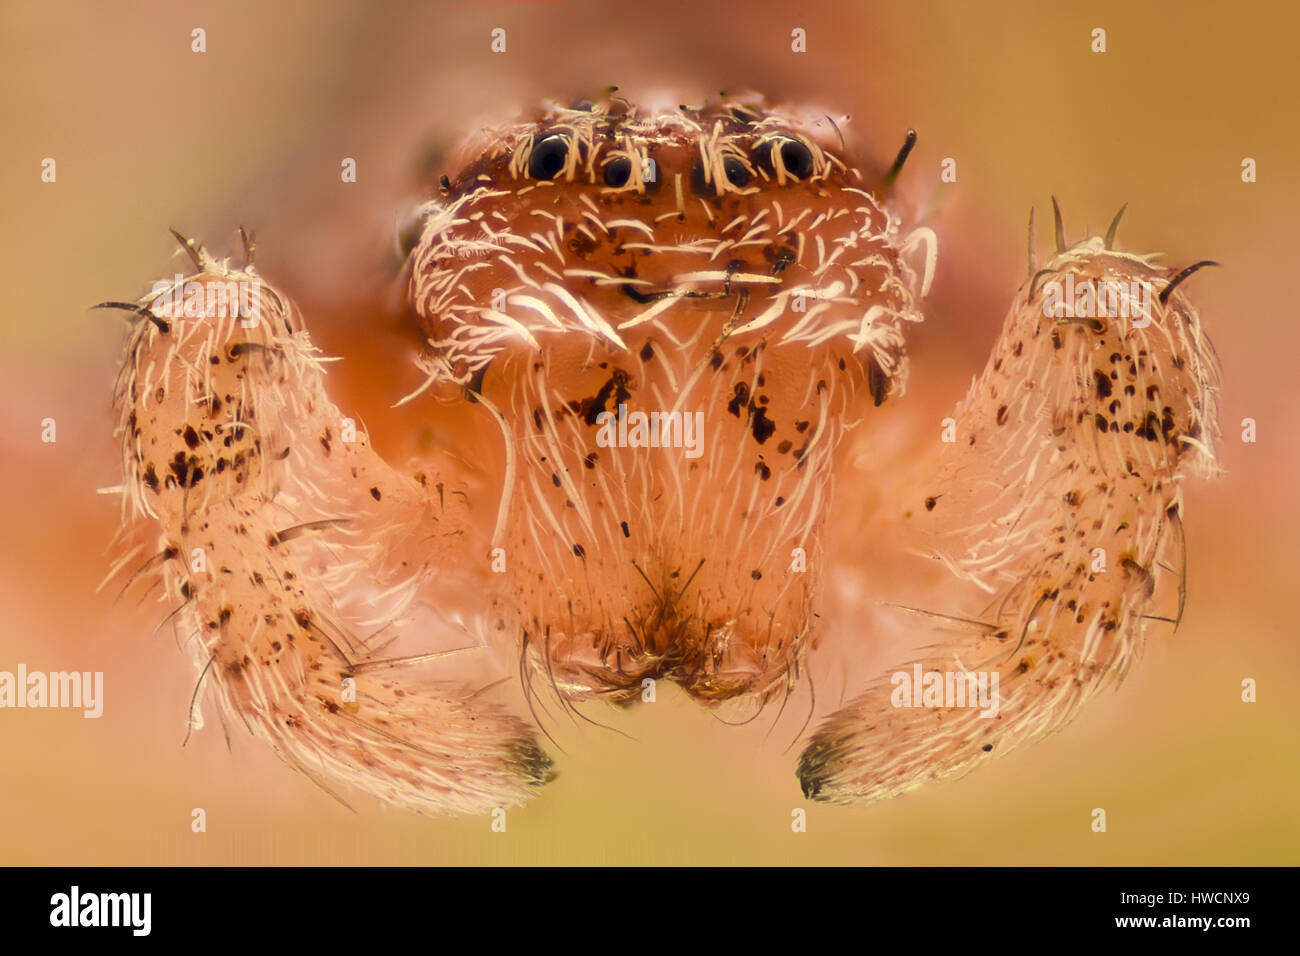 Ingrandimento estreme - Bianco spider, vista frontale Foto Stock